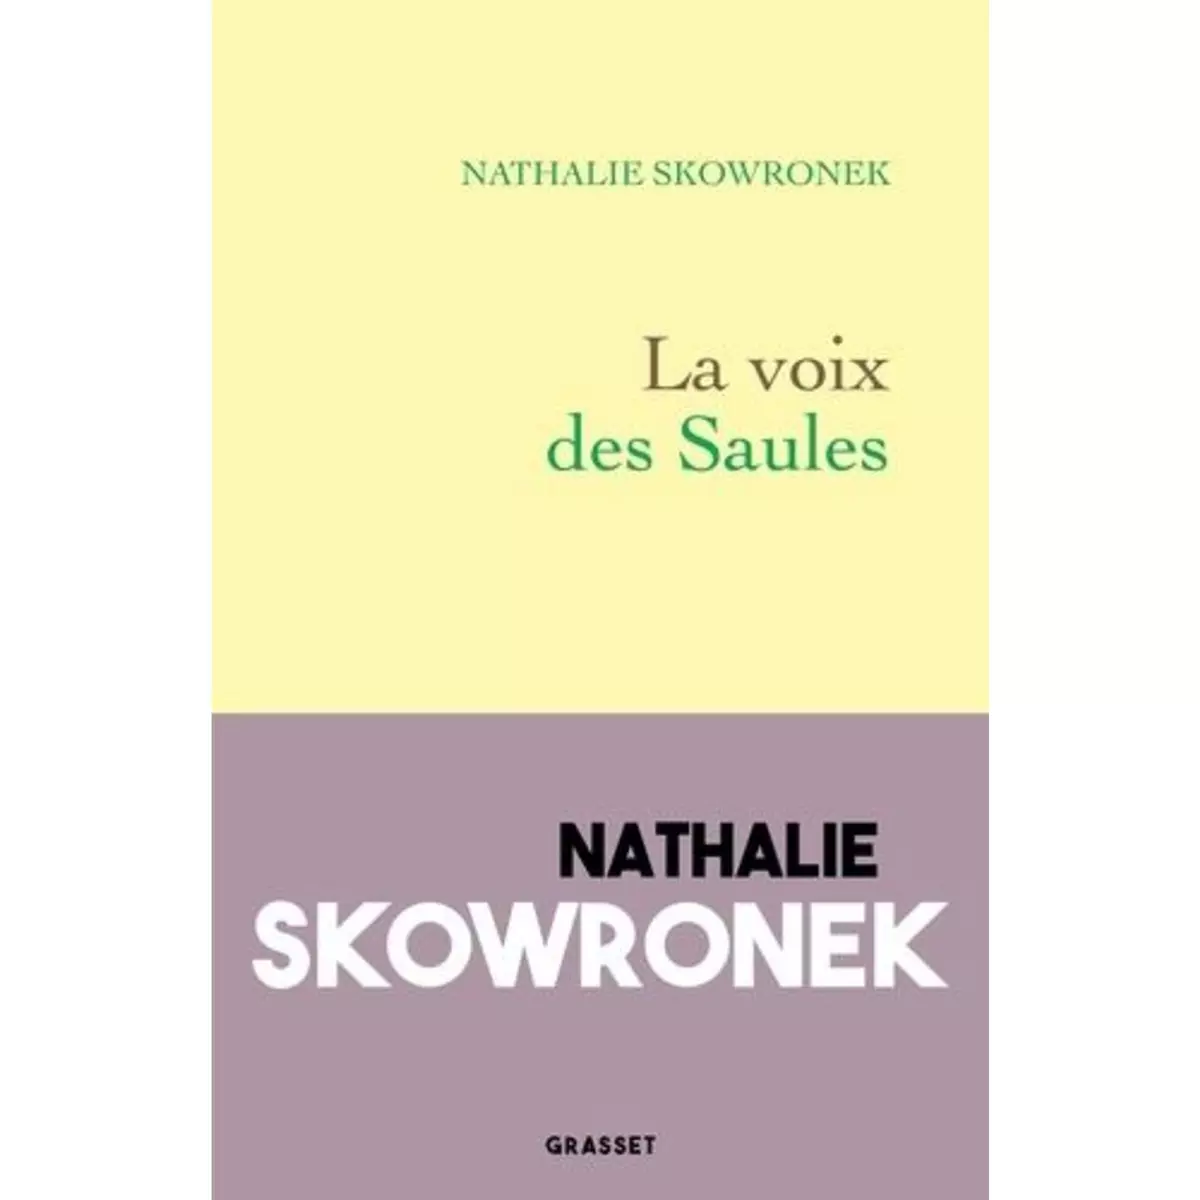  LA VOIX DES SAULES, Skowronek Nathalie